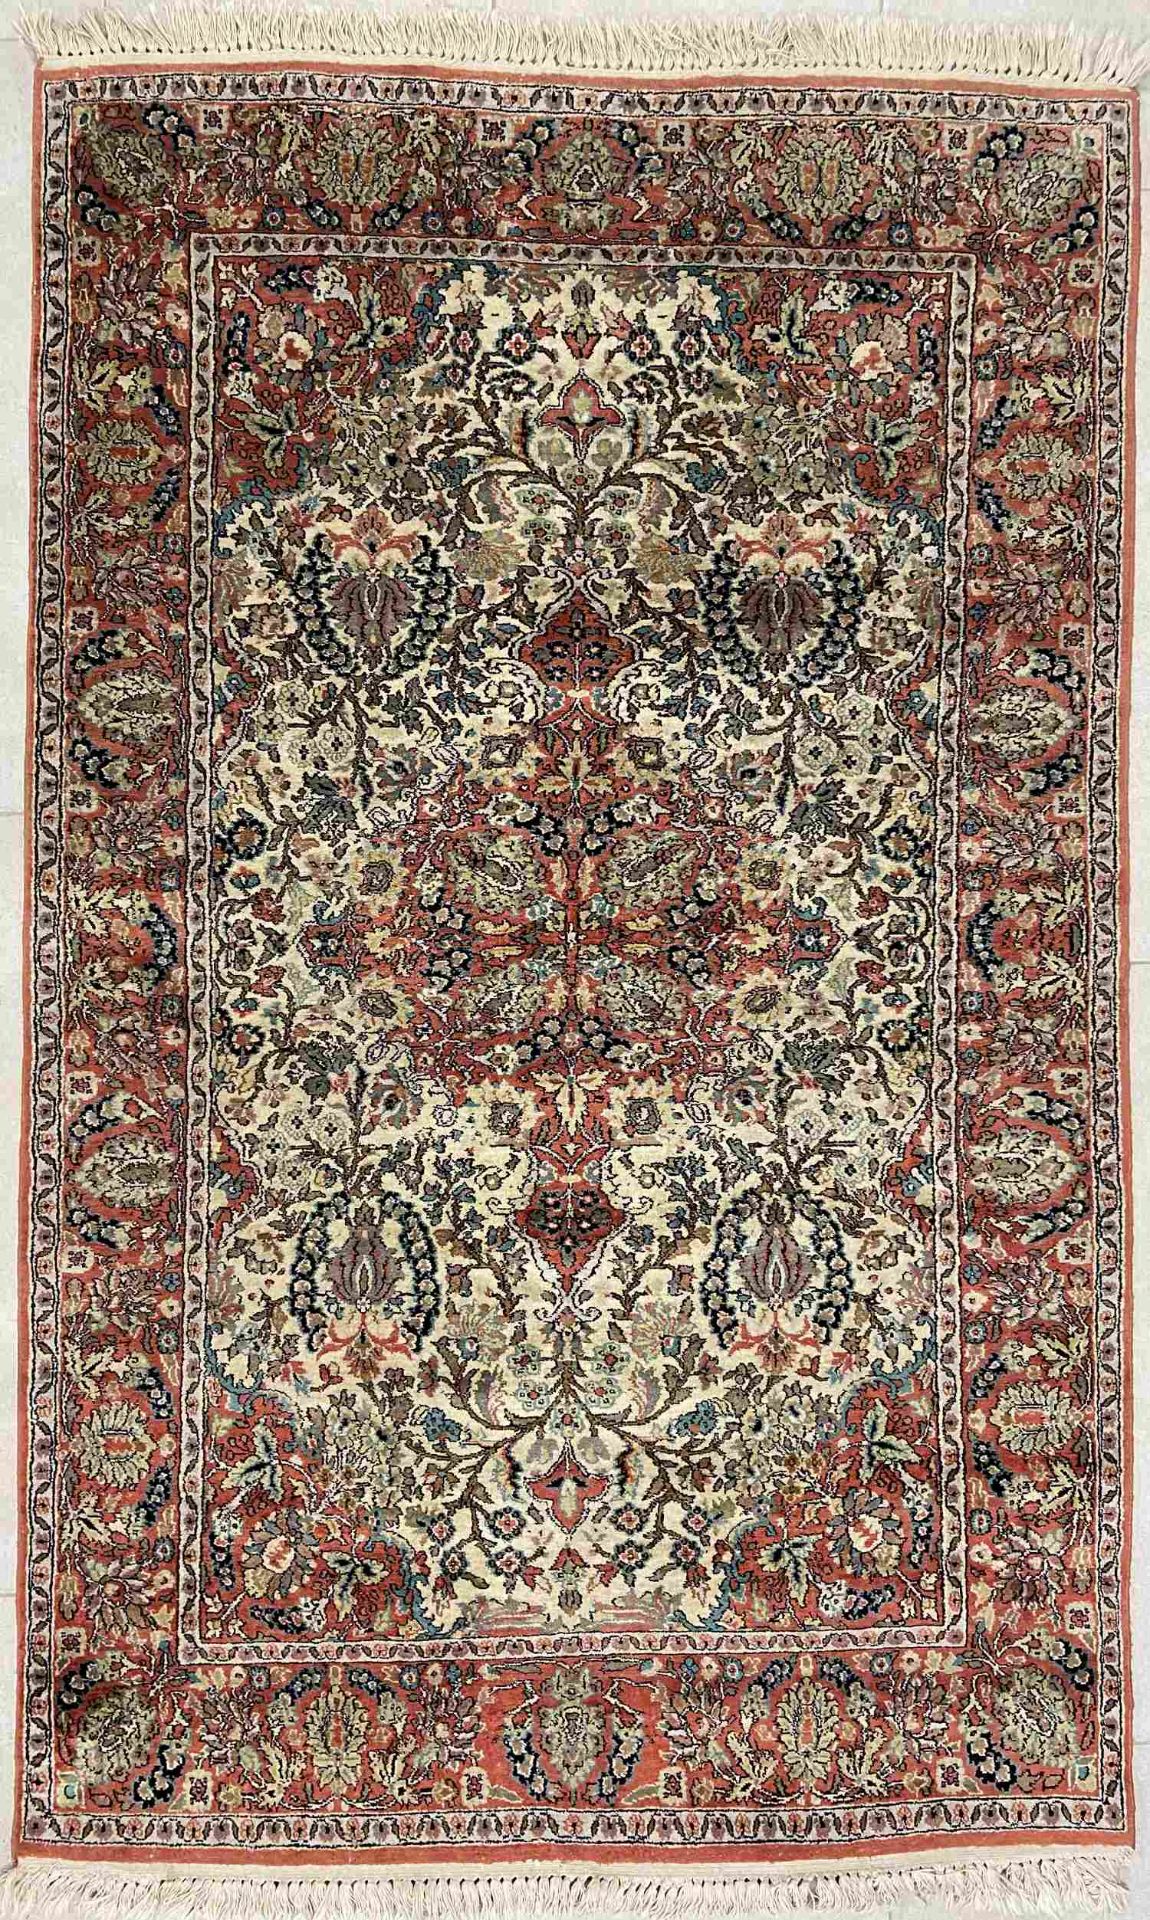 Handknotted silk carpet, cashmere